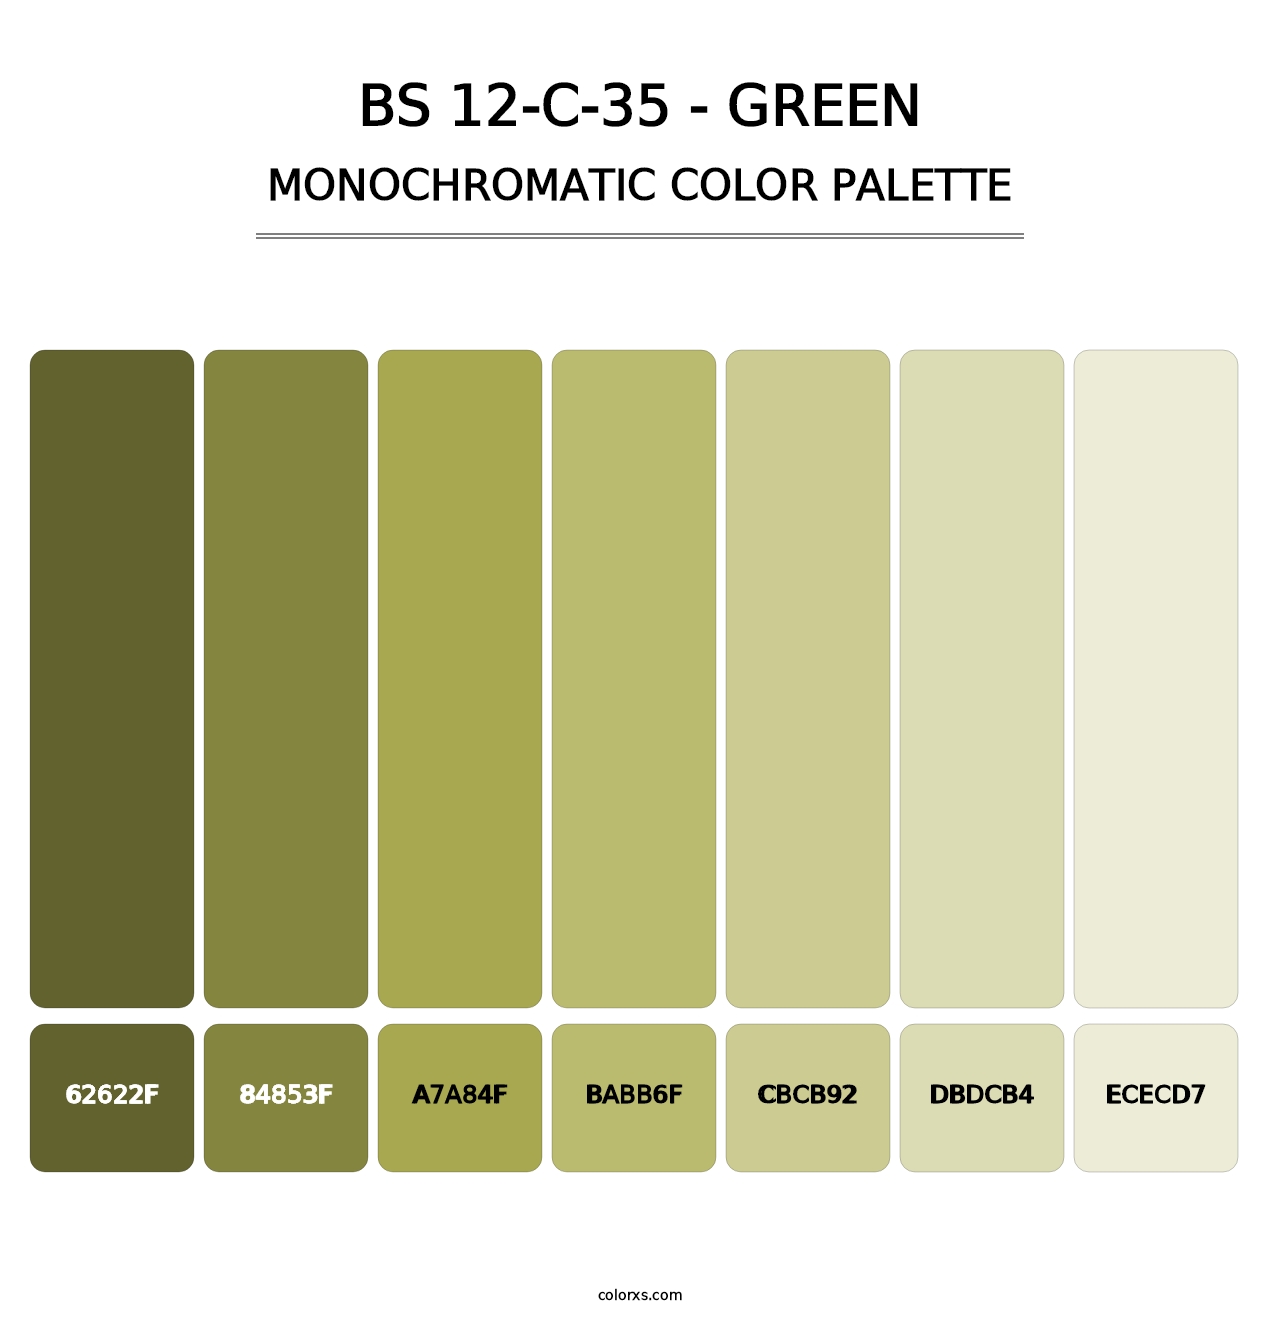 BS 12-C-35 - Green - Monochromatic Color Palette